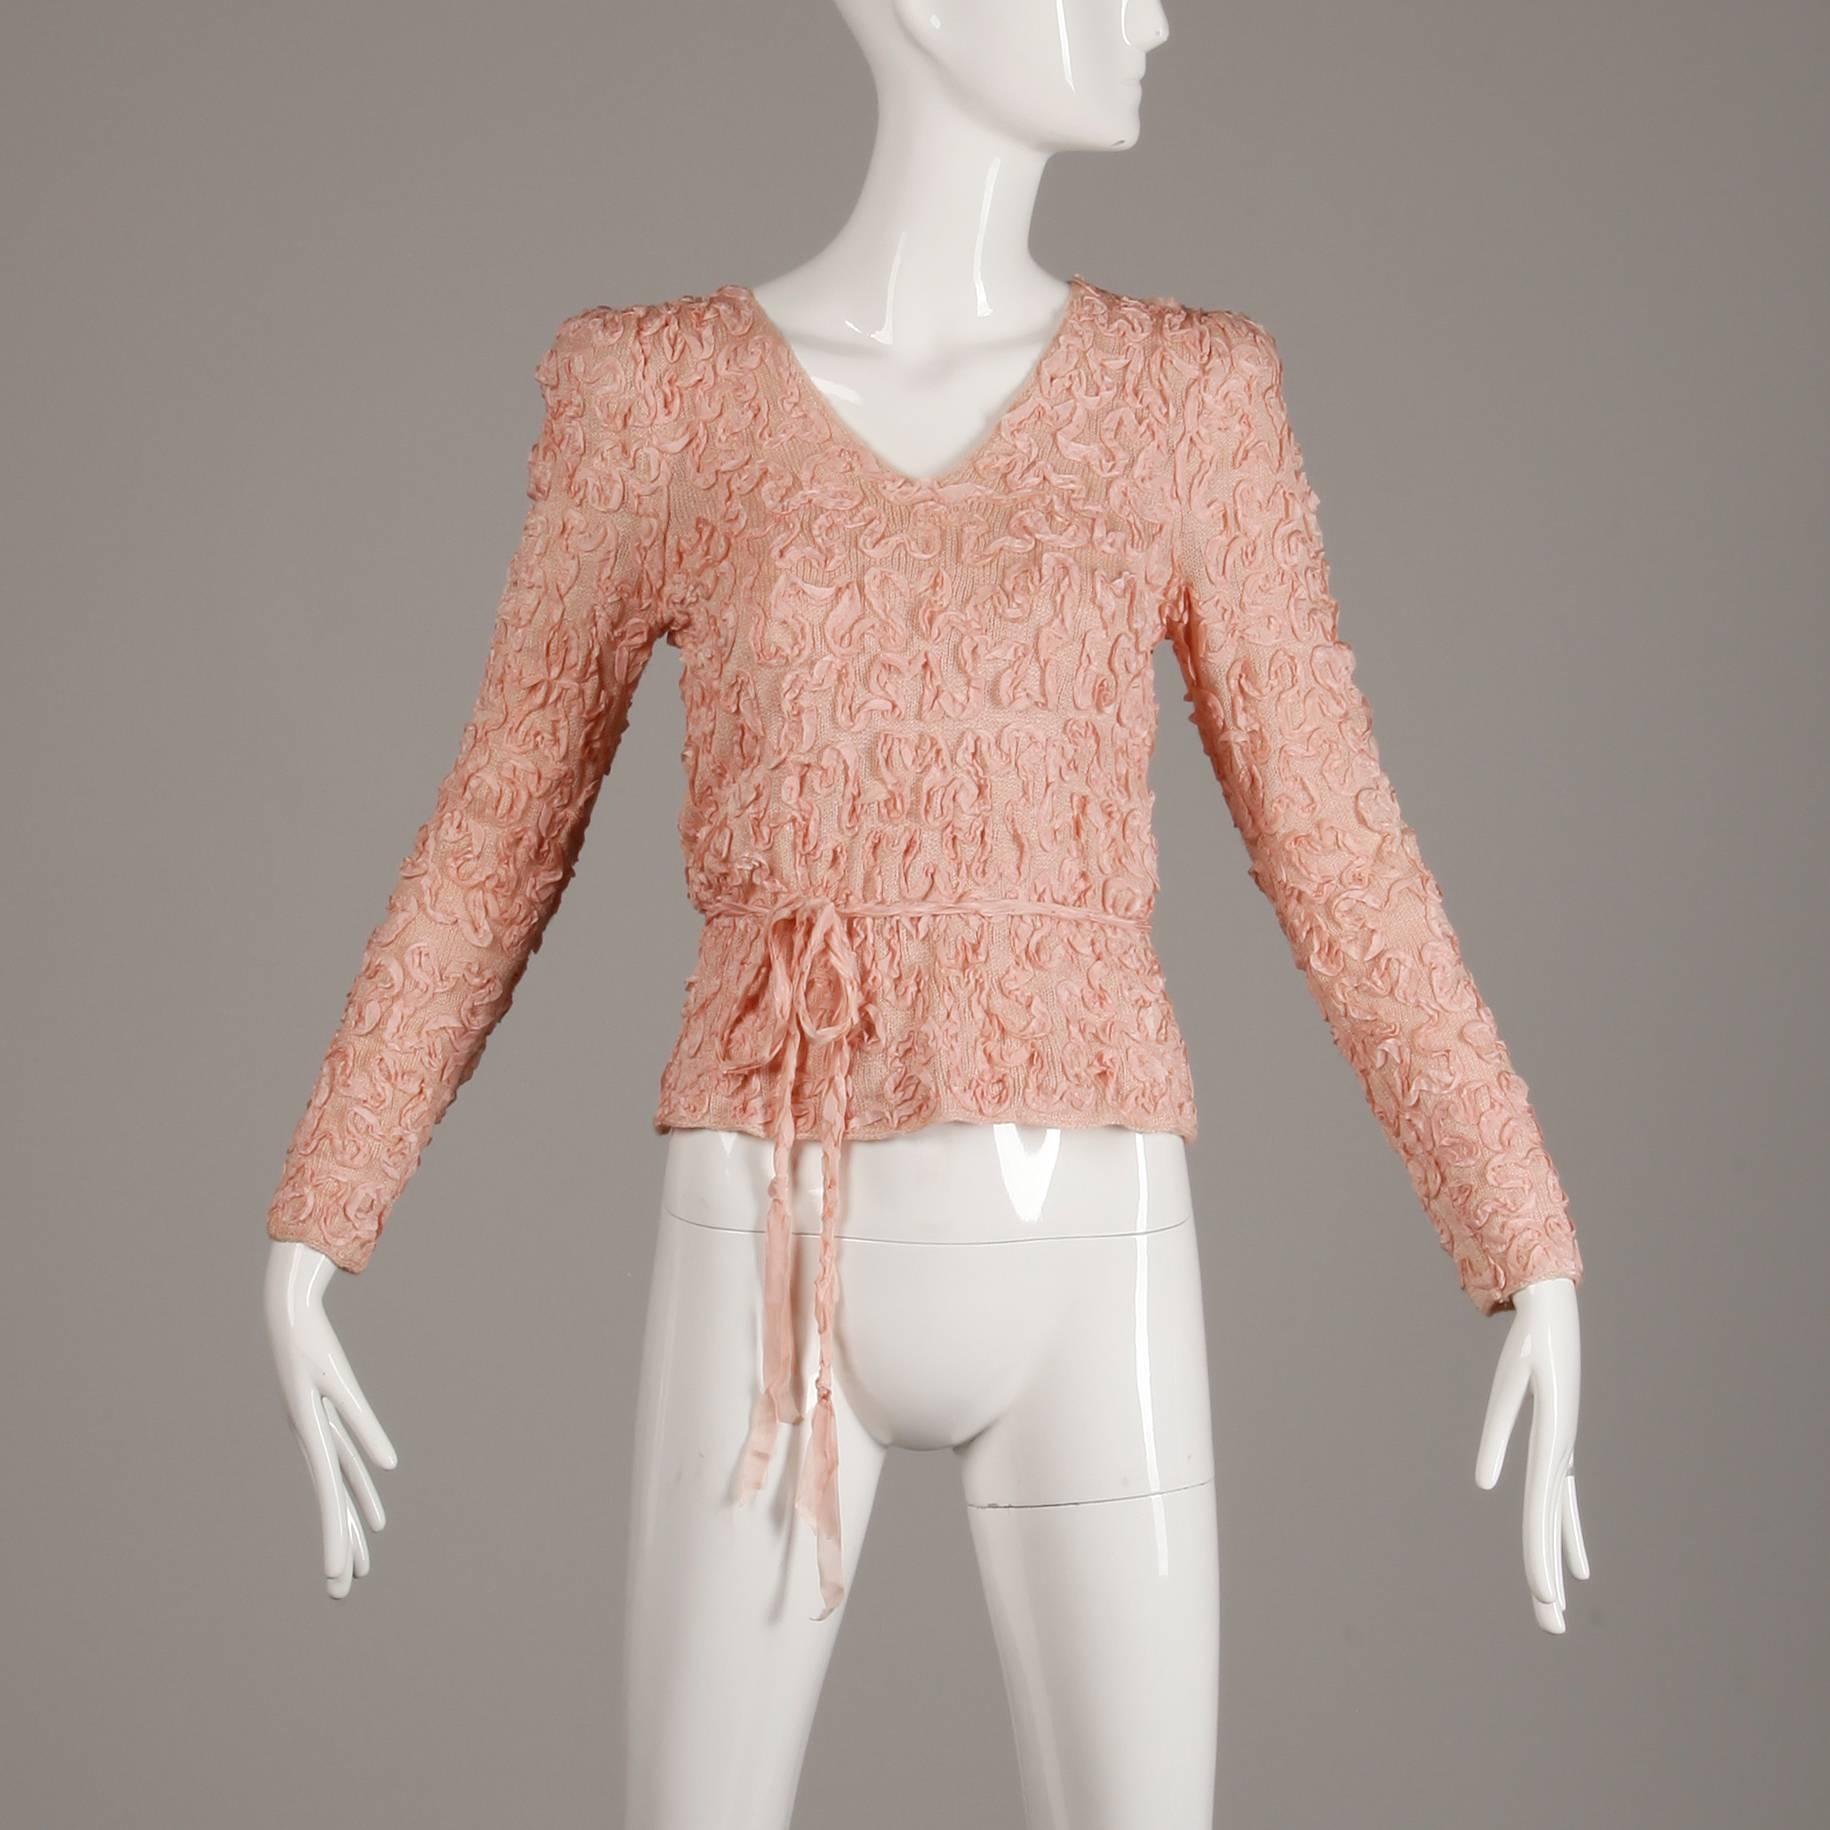 Brown 1970s Oscar de la Renta Vintage Pale Blush Pink Knit Soutache Sweater Top/ Shirt